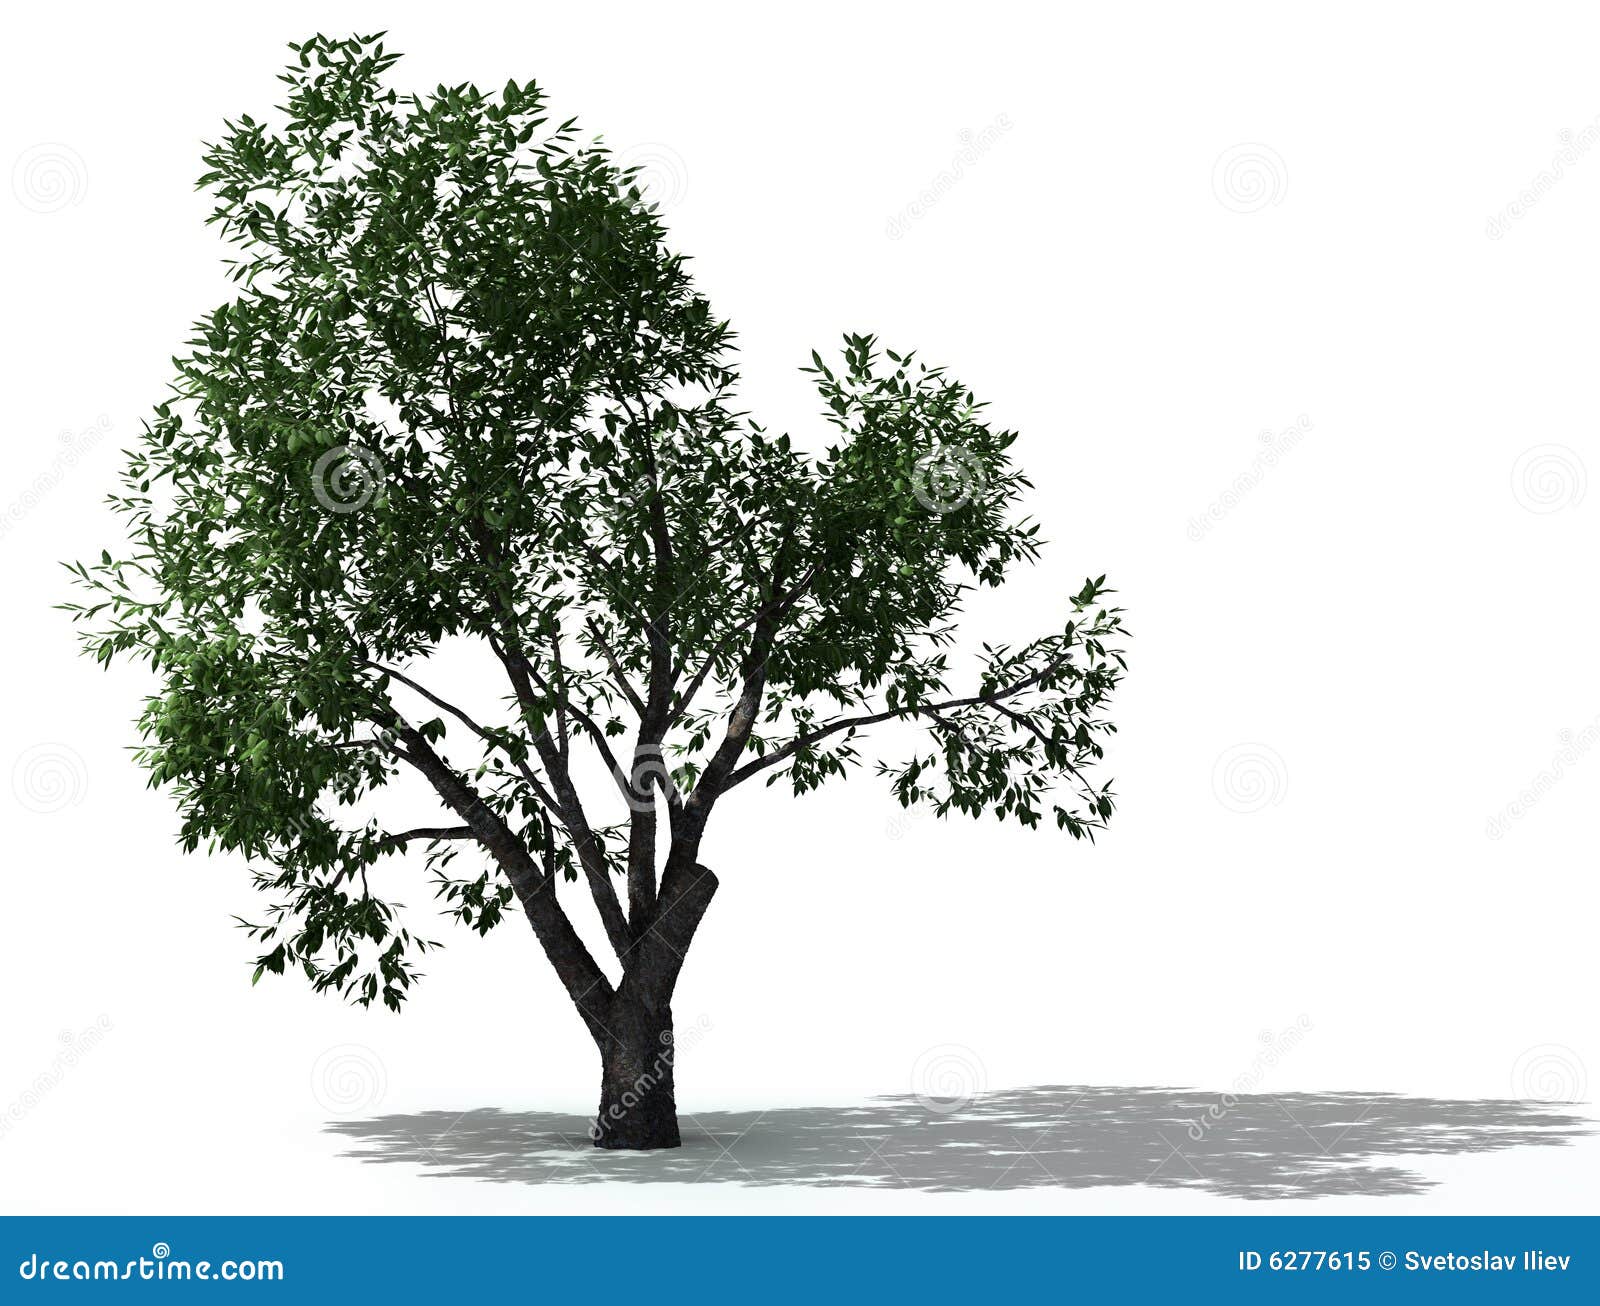 free clipart elm tree - photo #16